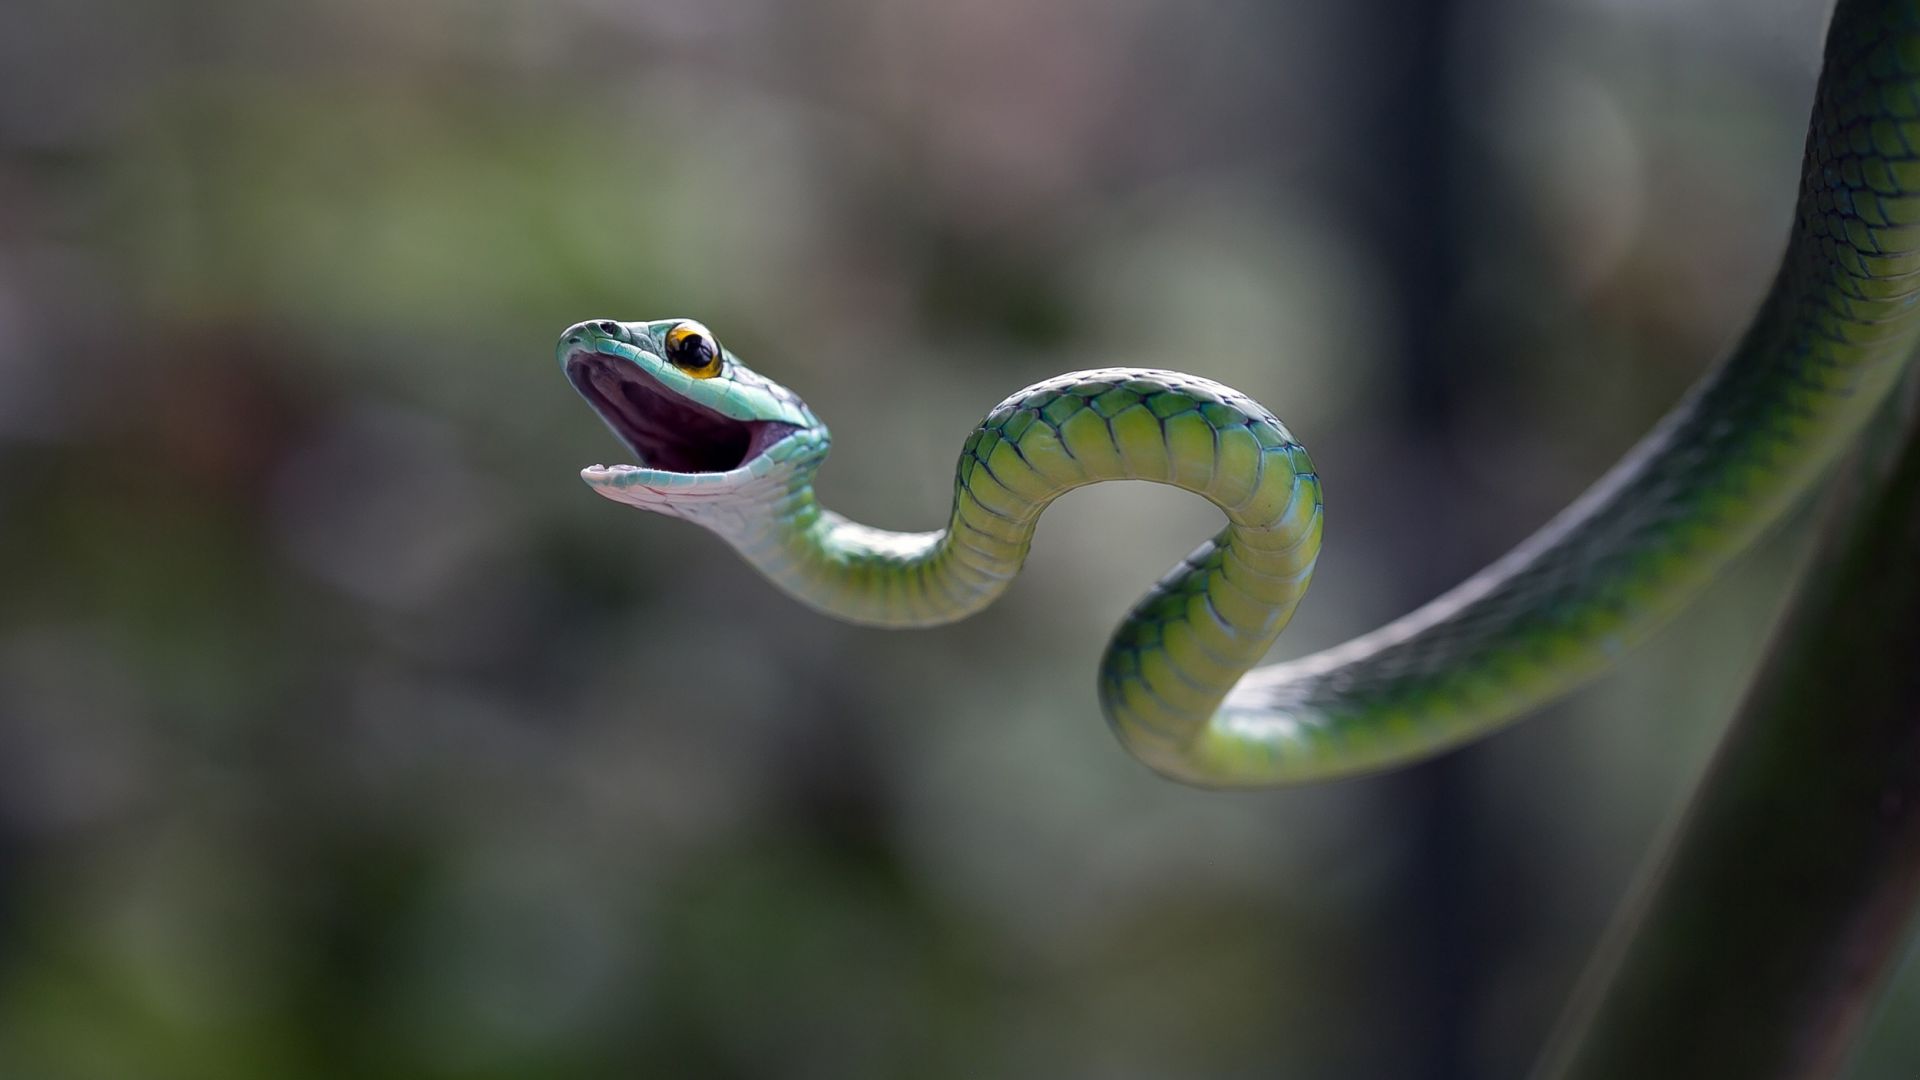 Eastern green mamba, snake, macro, blur (horizontal)